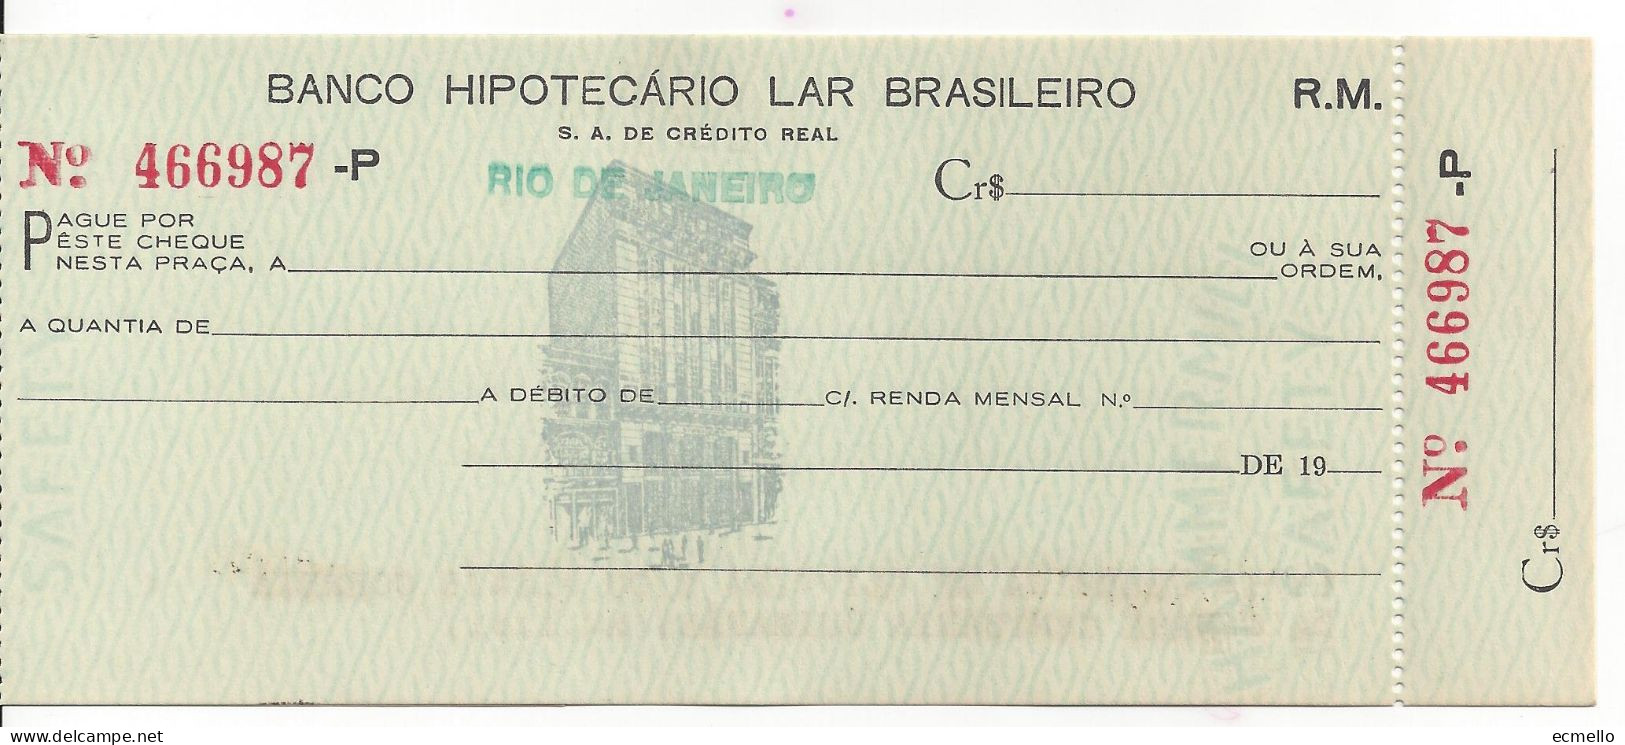 BRAZIL CHEQUE CHECK BANCO HIPOTECARIO LAR BRASILEIRO, RIO, 1950'S BUILDING VIGNETTE VD - Chèques & Chèques De Voyage